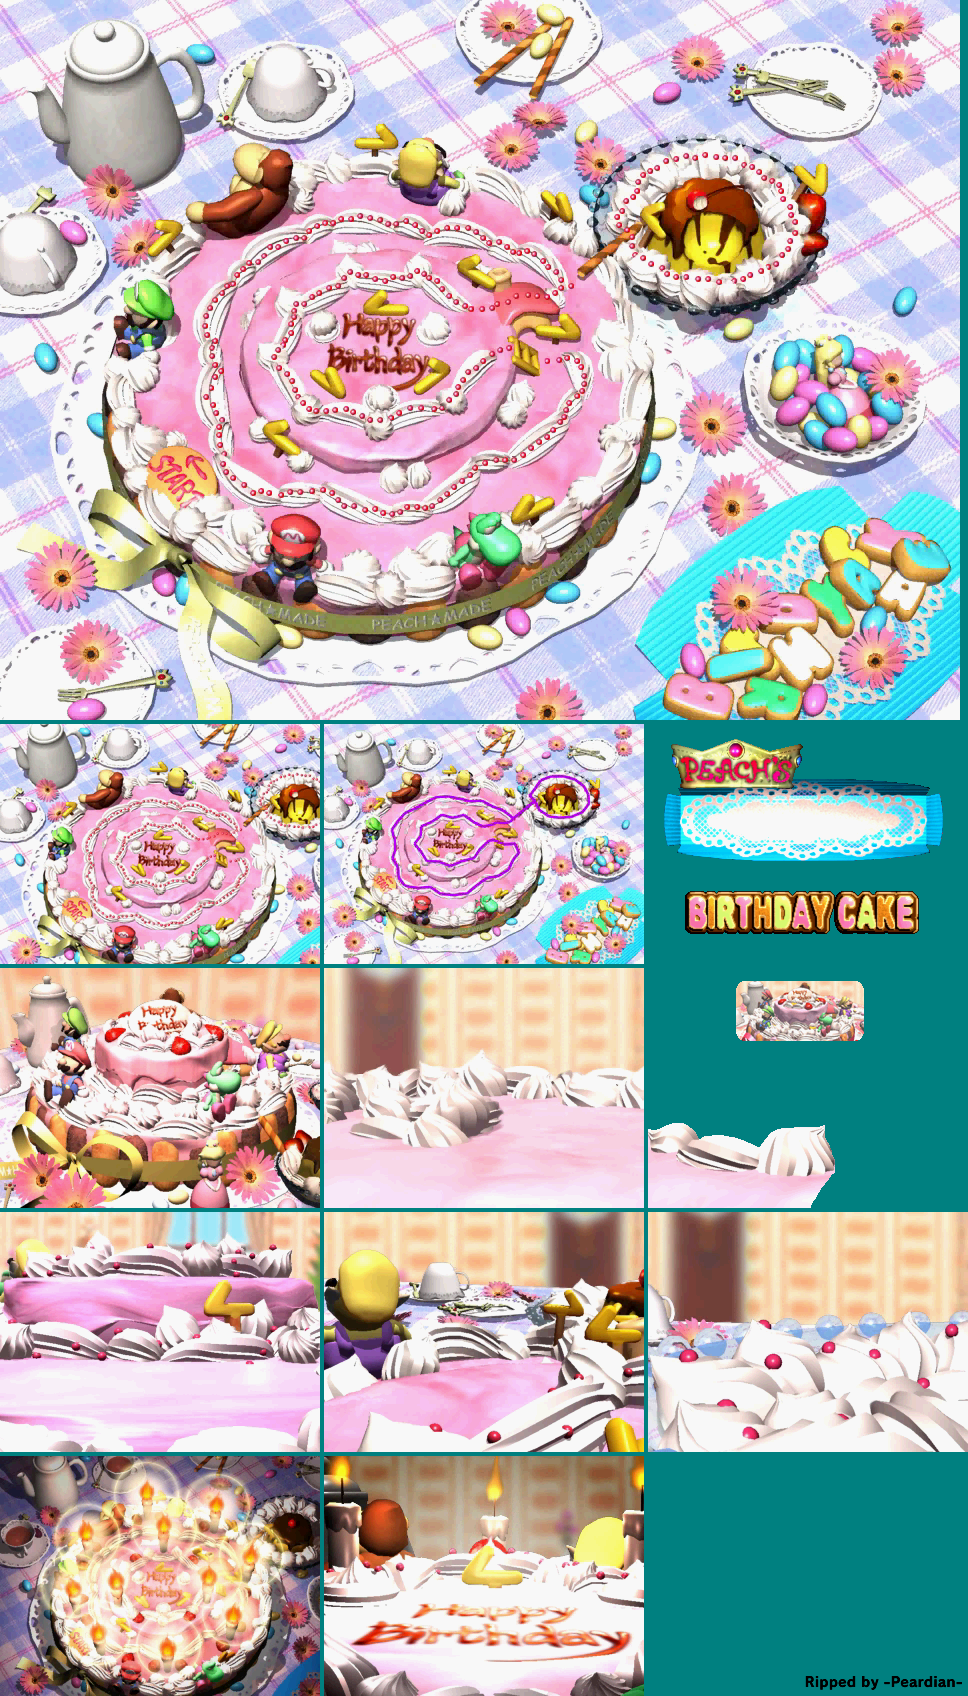 Peach's Birthday Cake